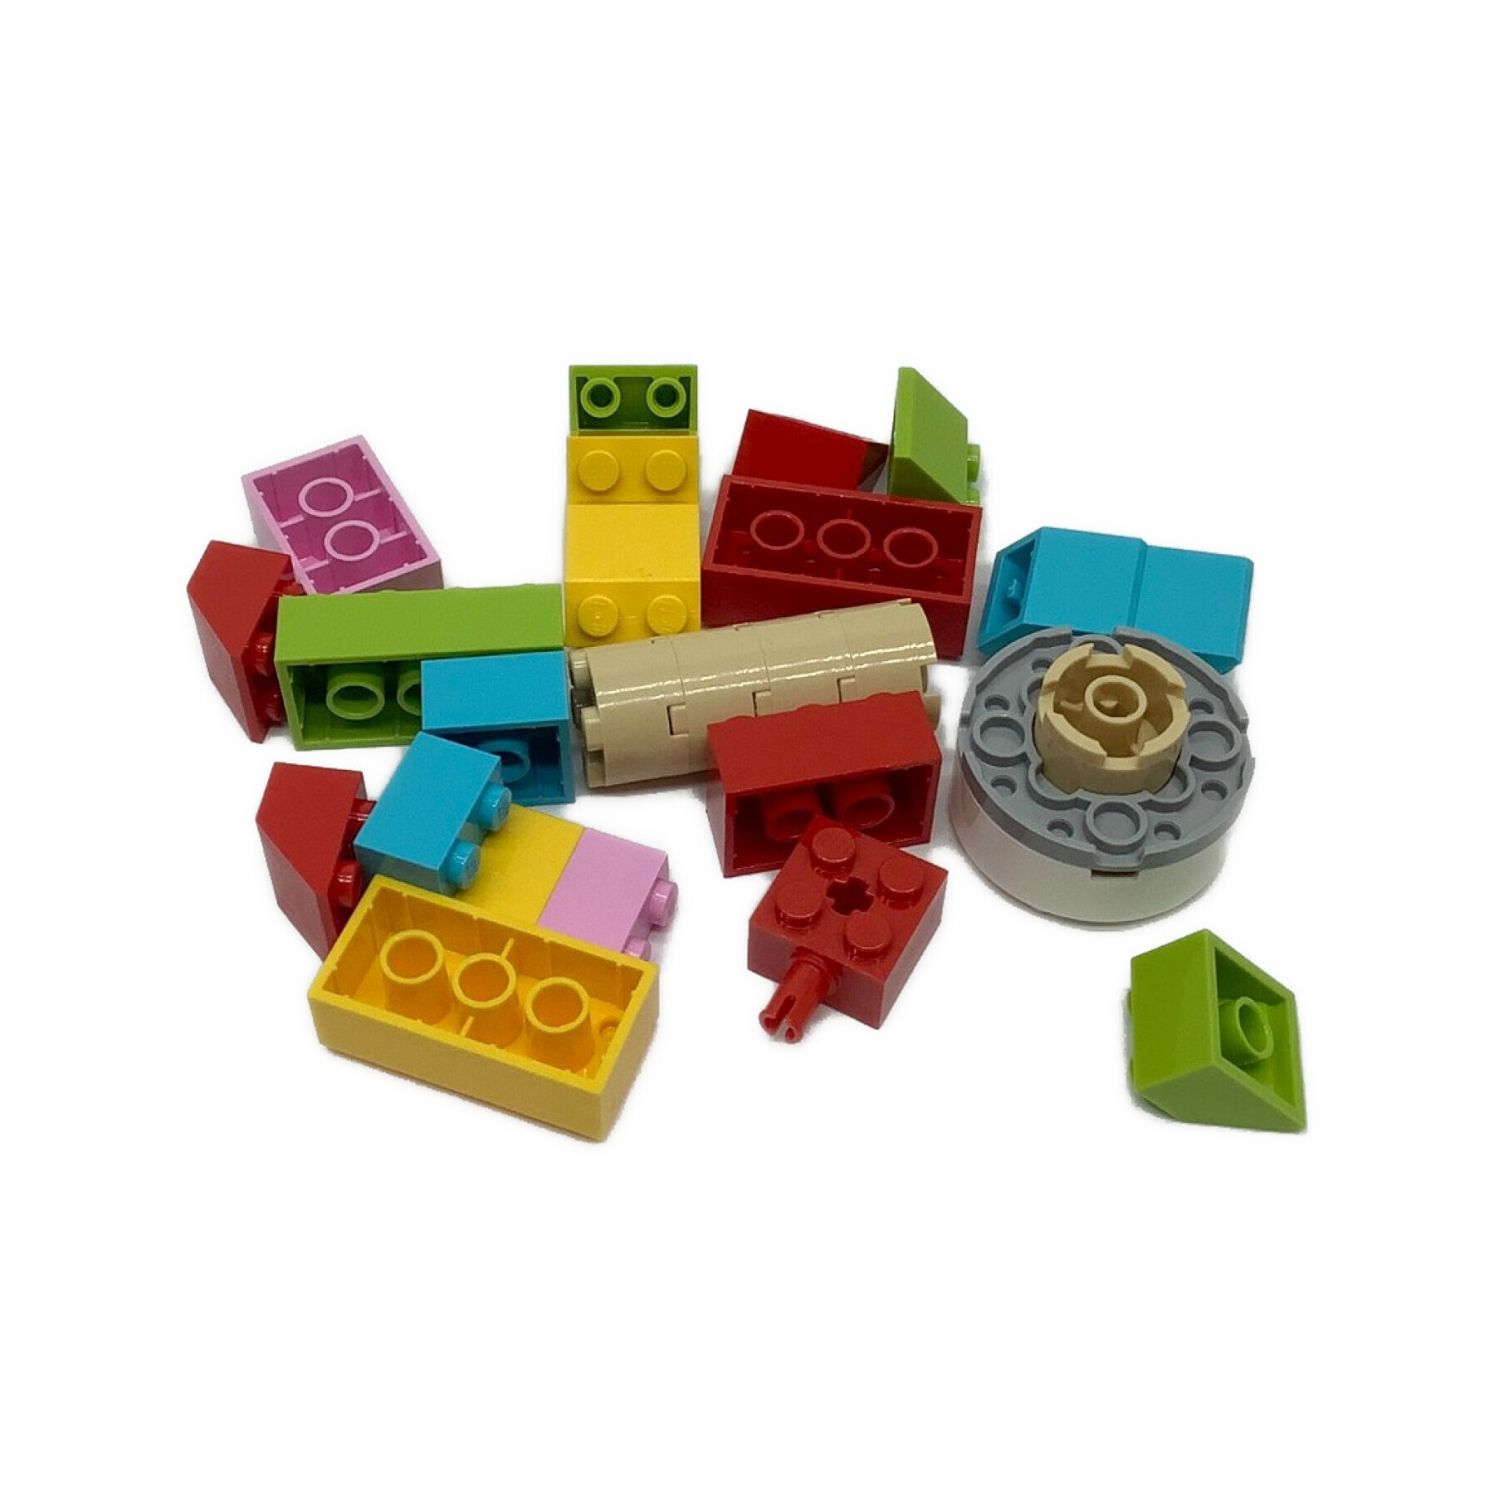 LEGO (レゴ) 男の子おもちゃ 853967 木製ミニフィギュア